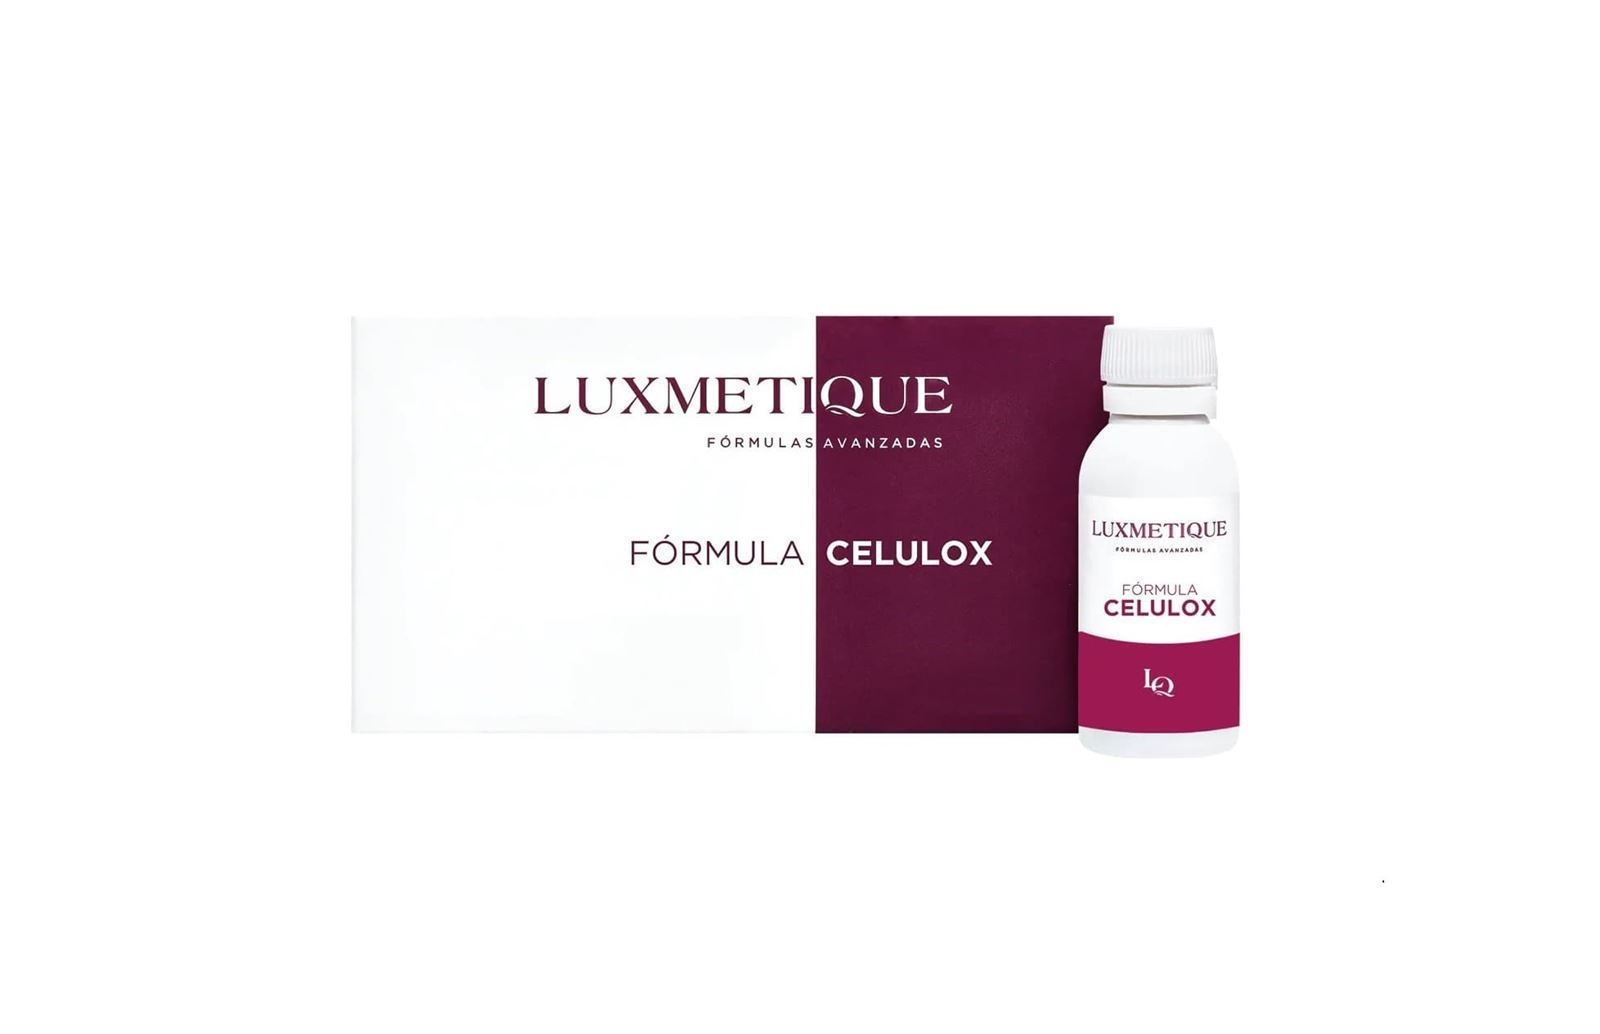 Luxmetique Fórmula Celulox - Imagen 1